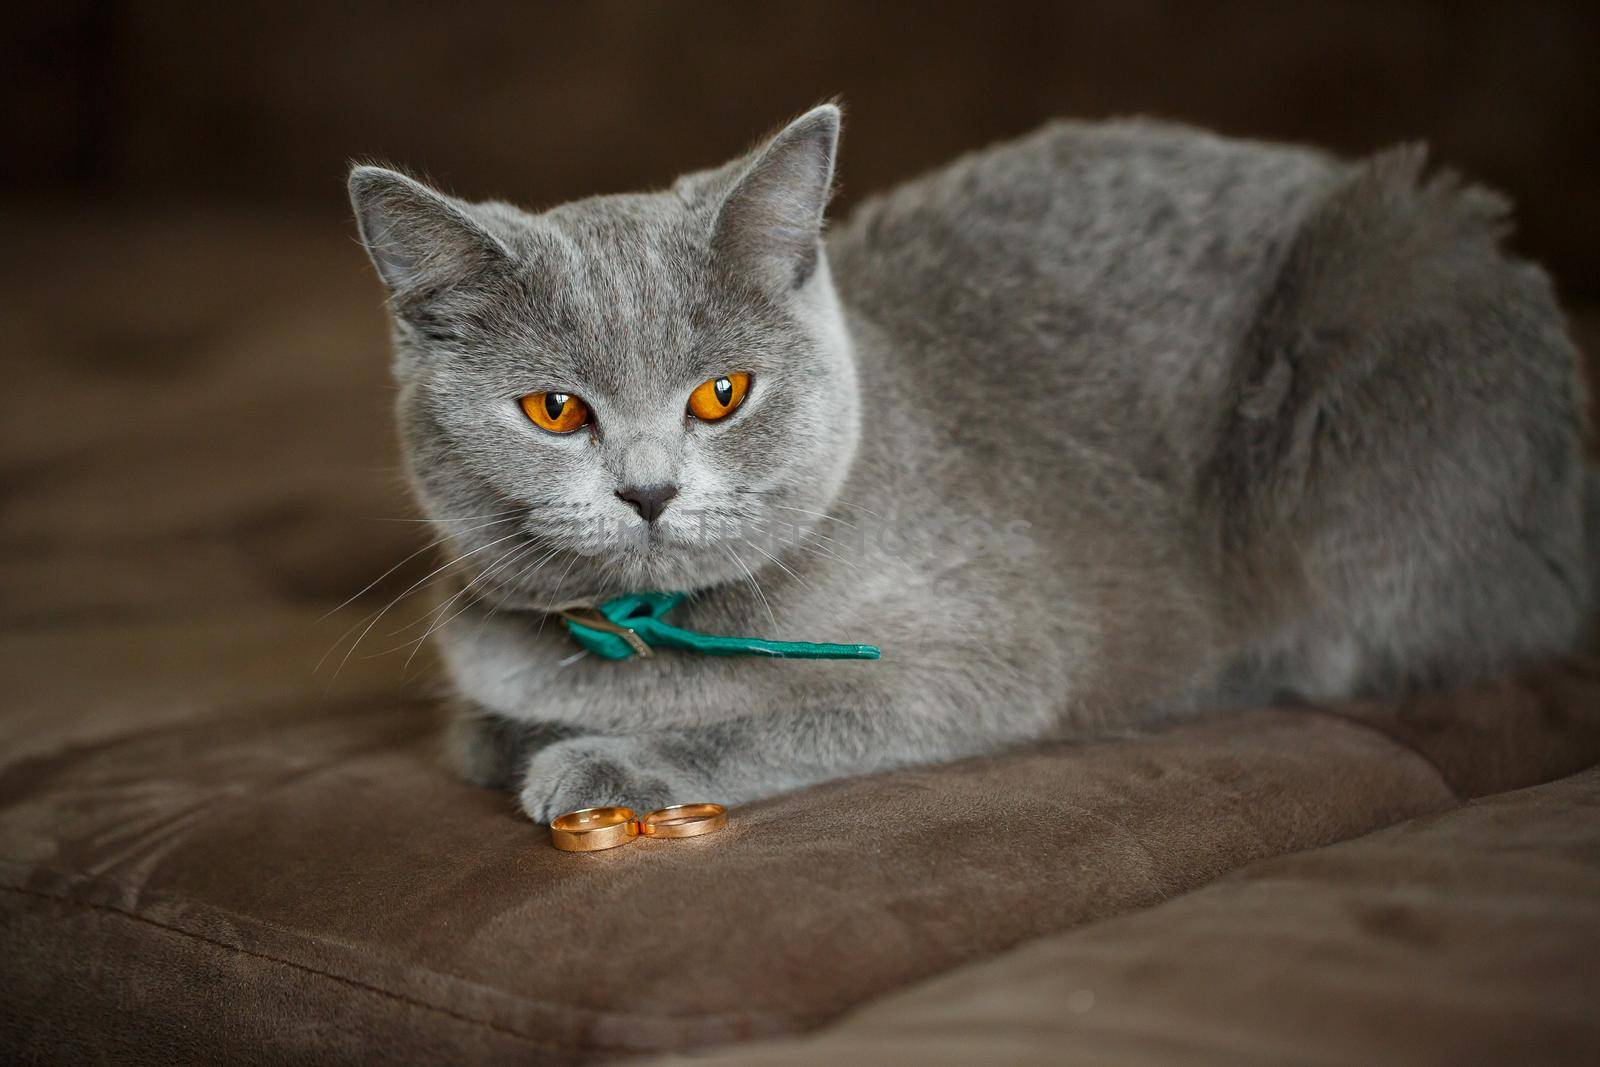 Fluffy gray cat sits near gold wedding rings